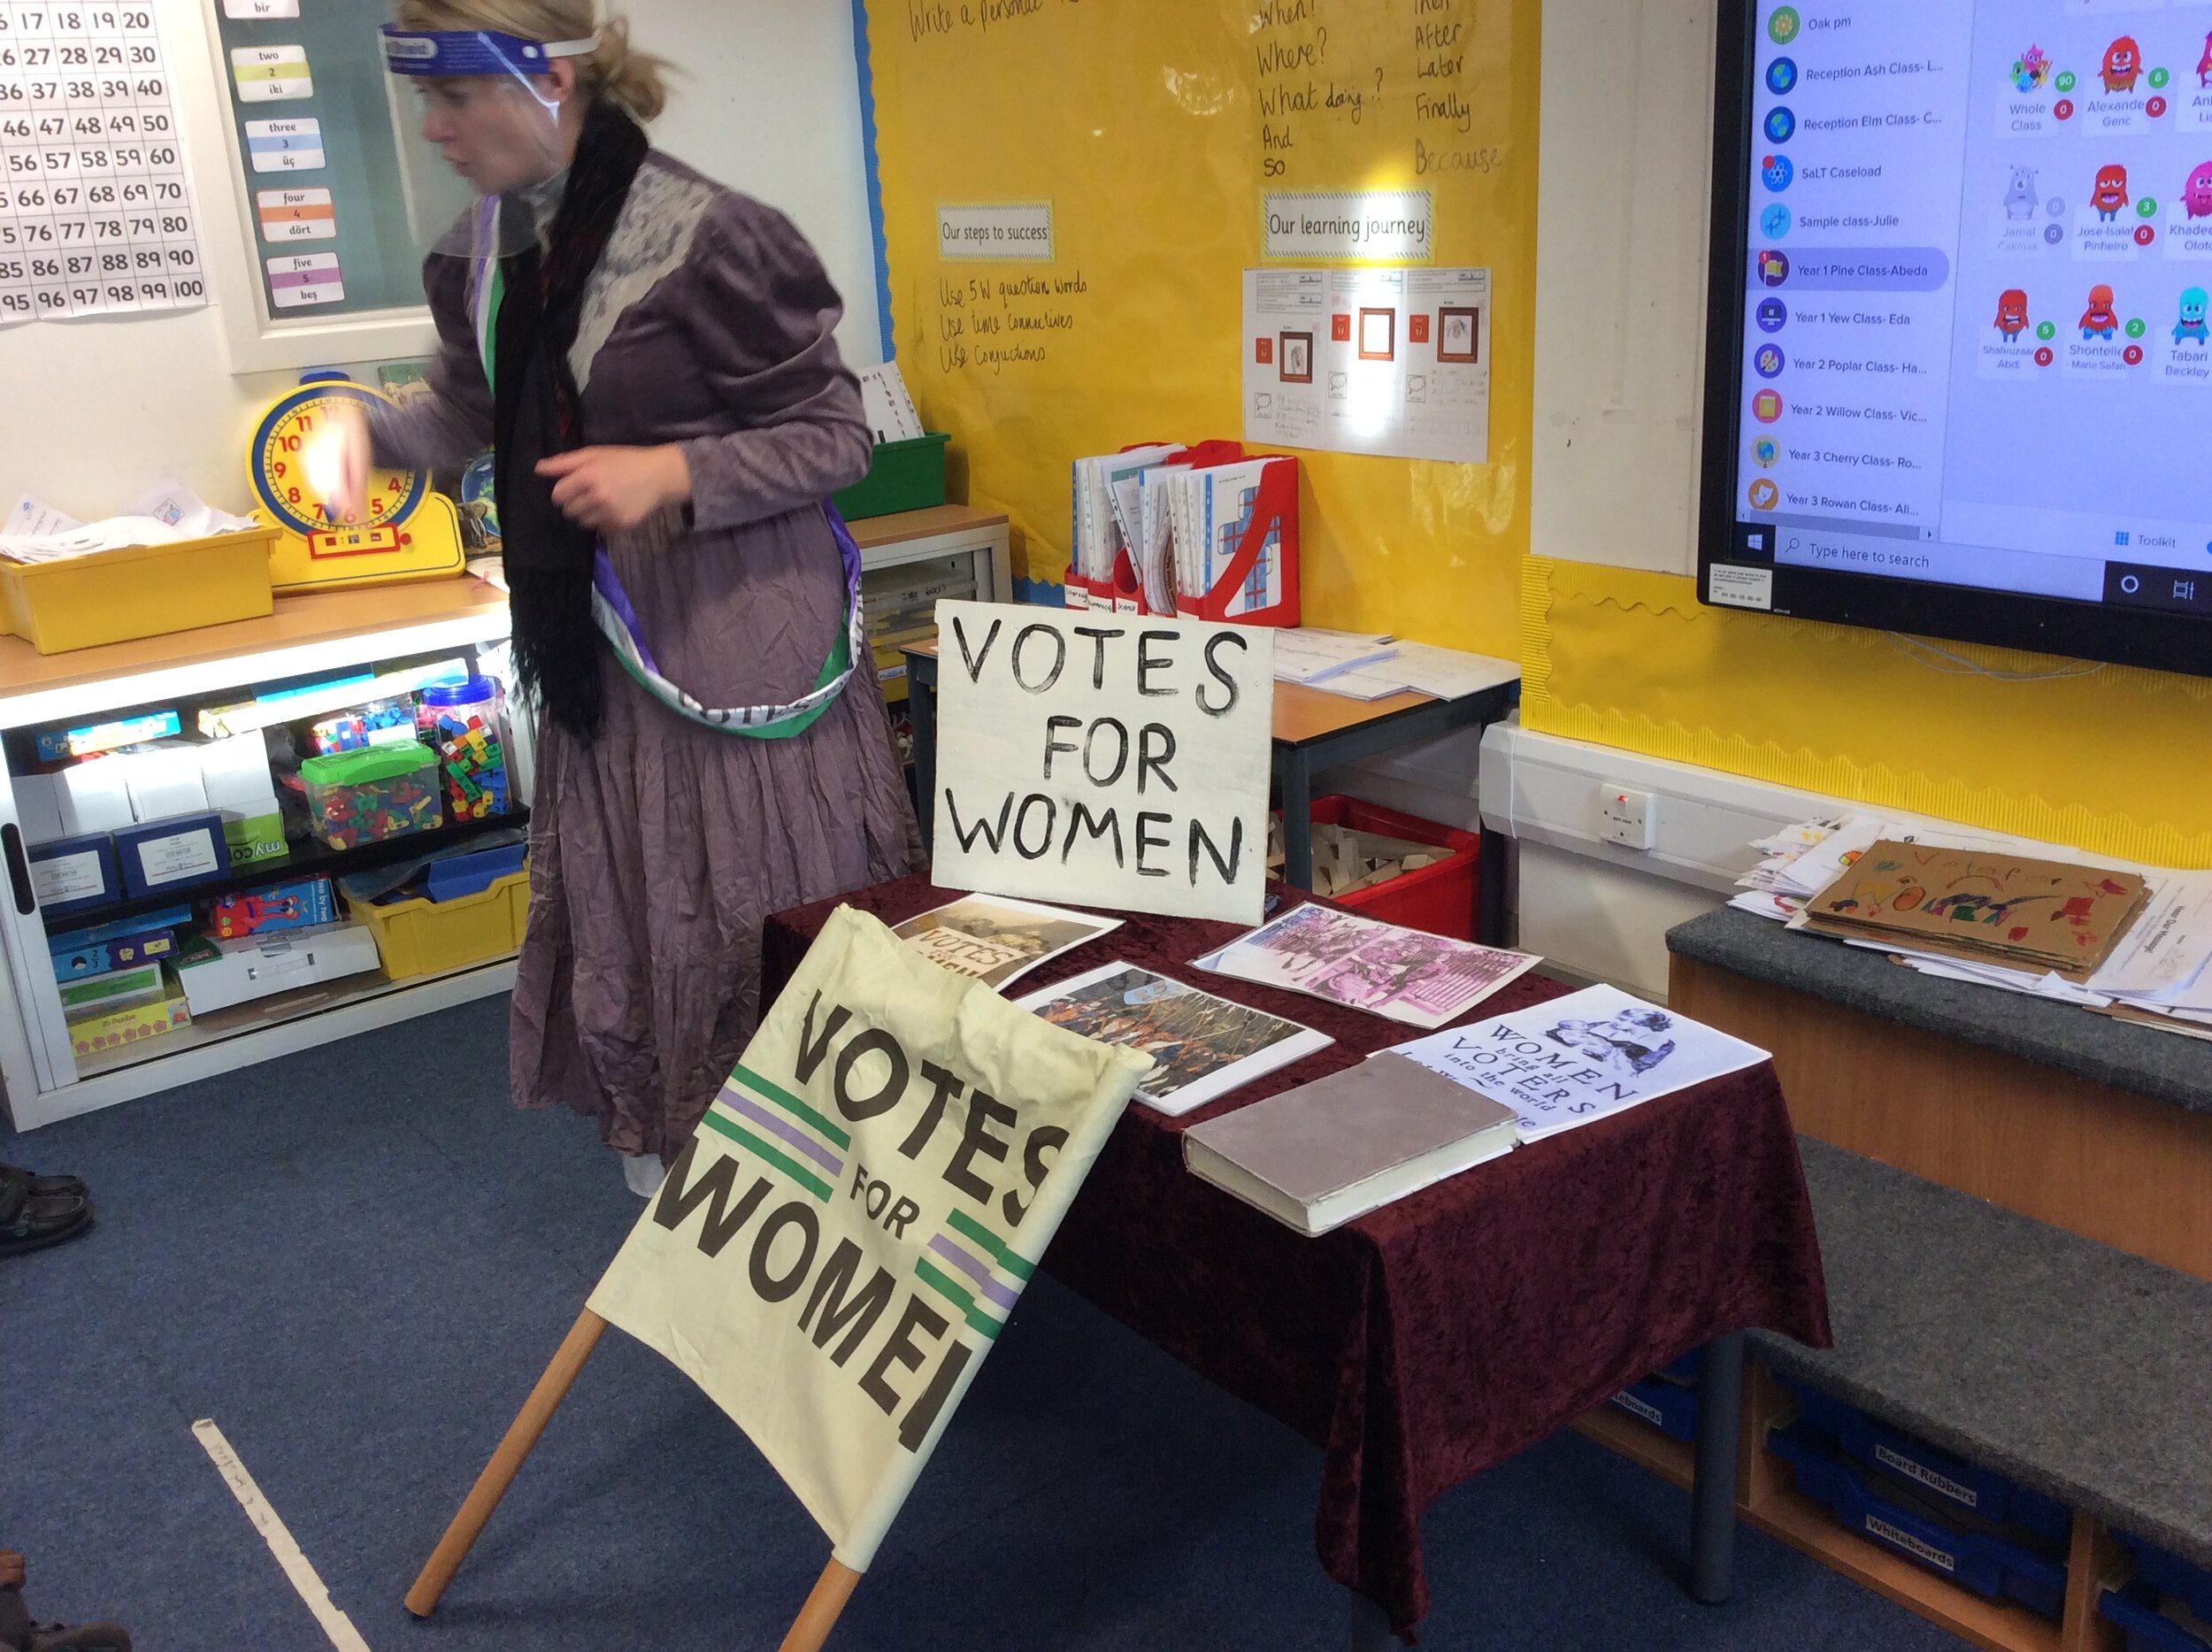 Suffragettes Workshop!